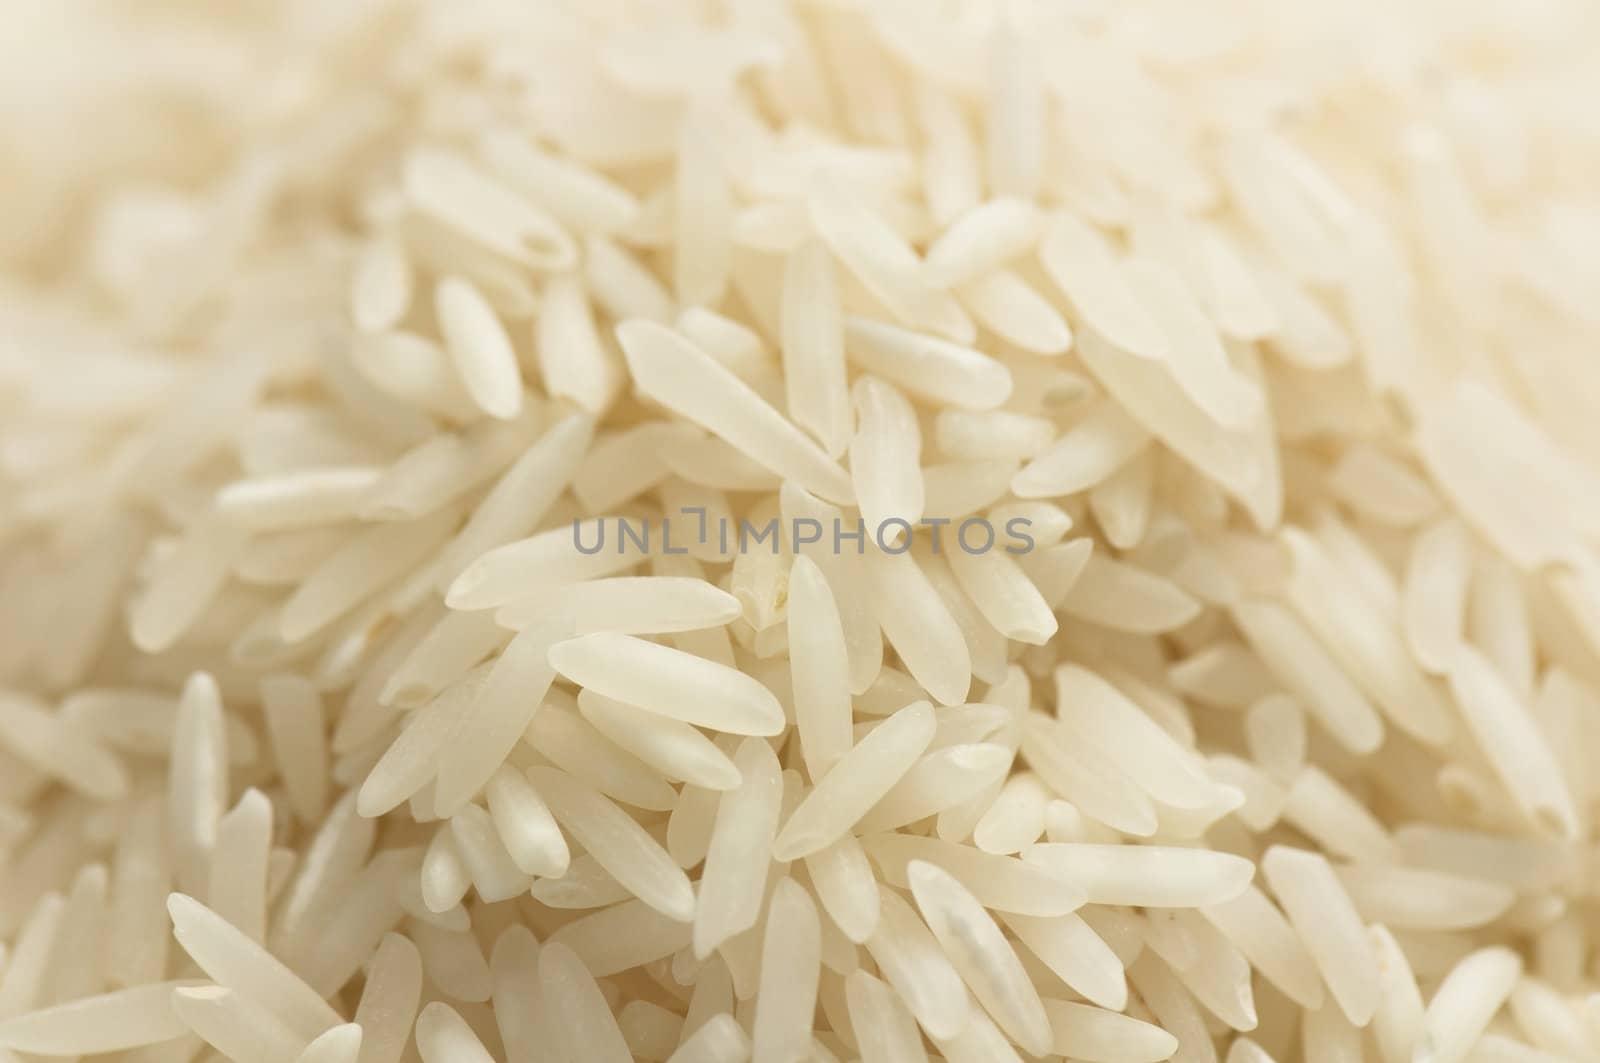 Basmati rice by dutourdumonde